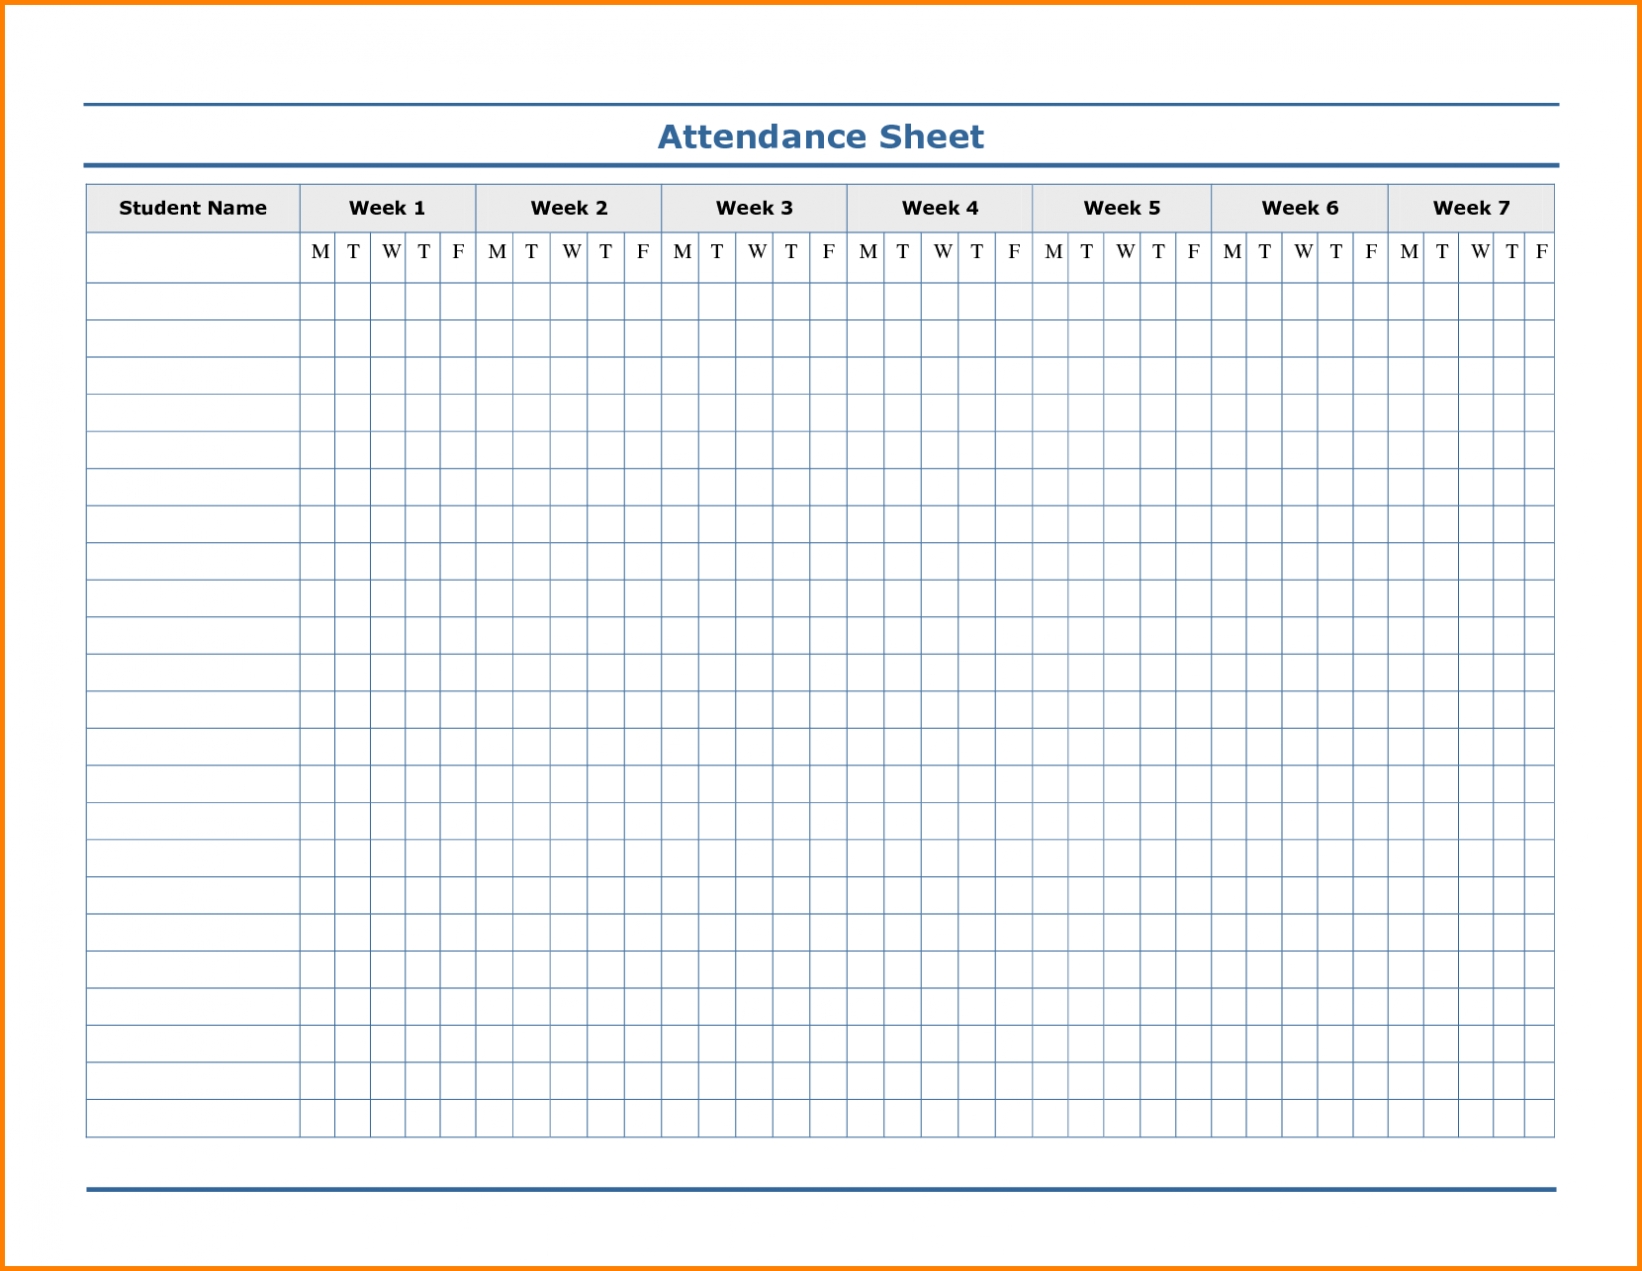 Free Printable Employee Attendance Sheet Pdf, Word, Excel-2020 Employee Attendance Calendar Templates